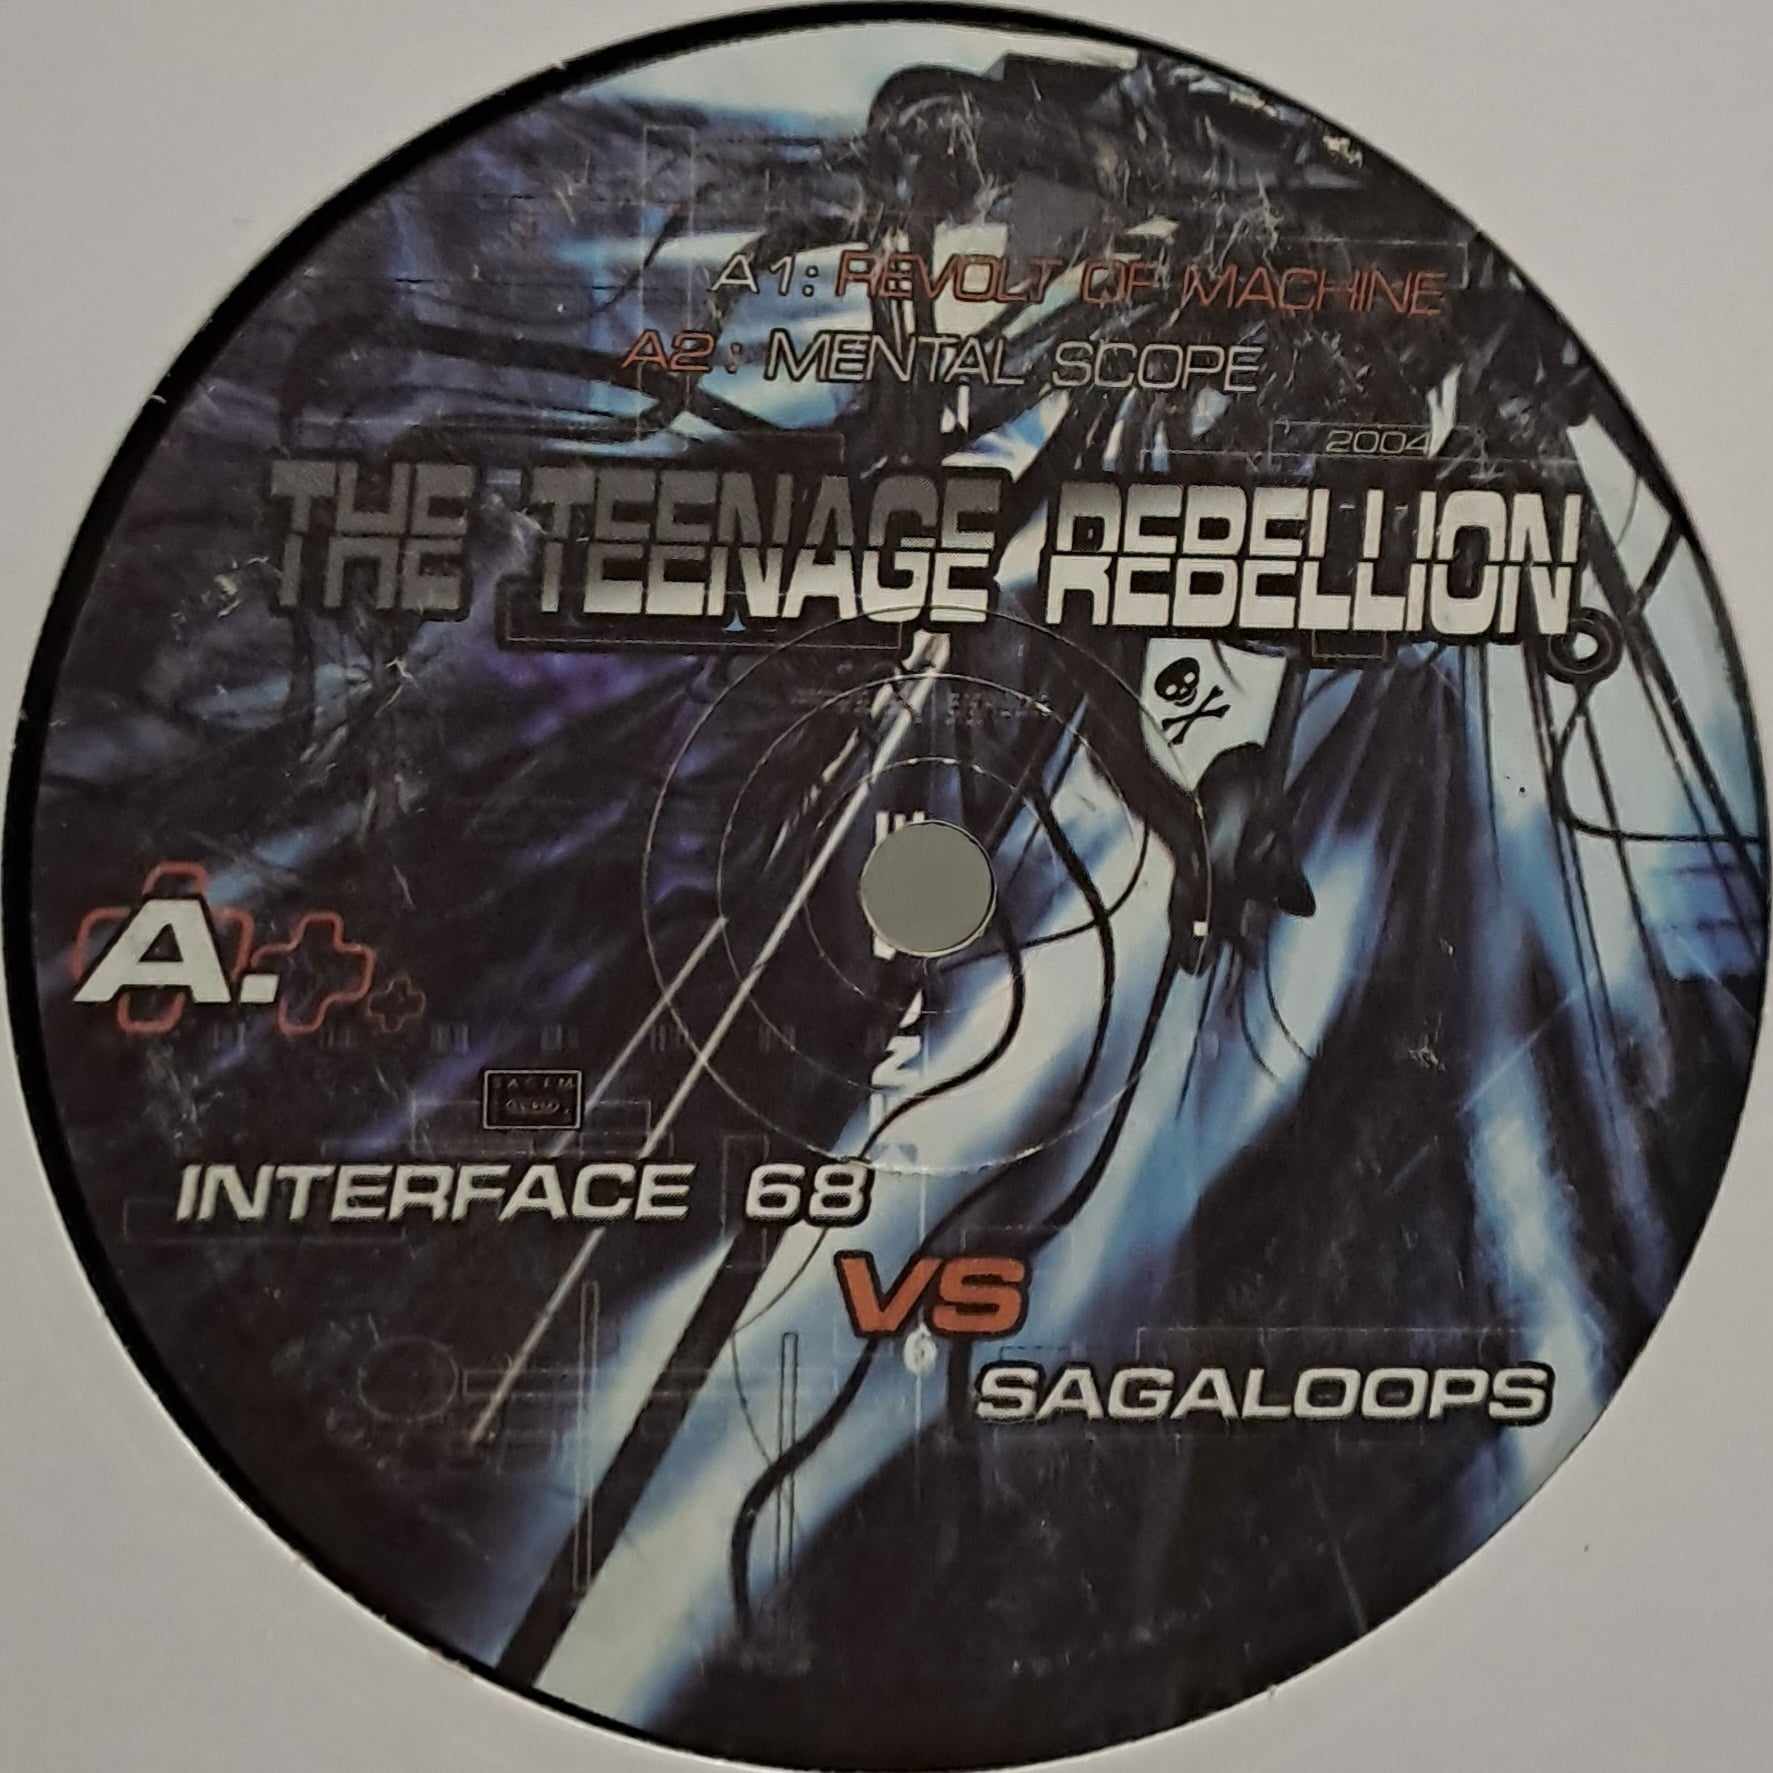 LSDF – The Teenage Rebellion - vinyle freetekno